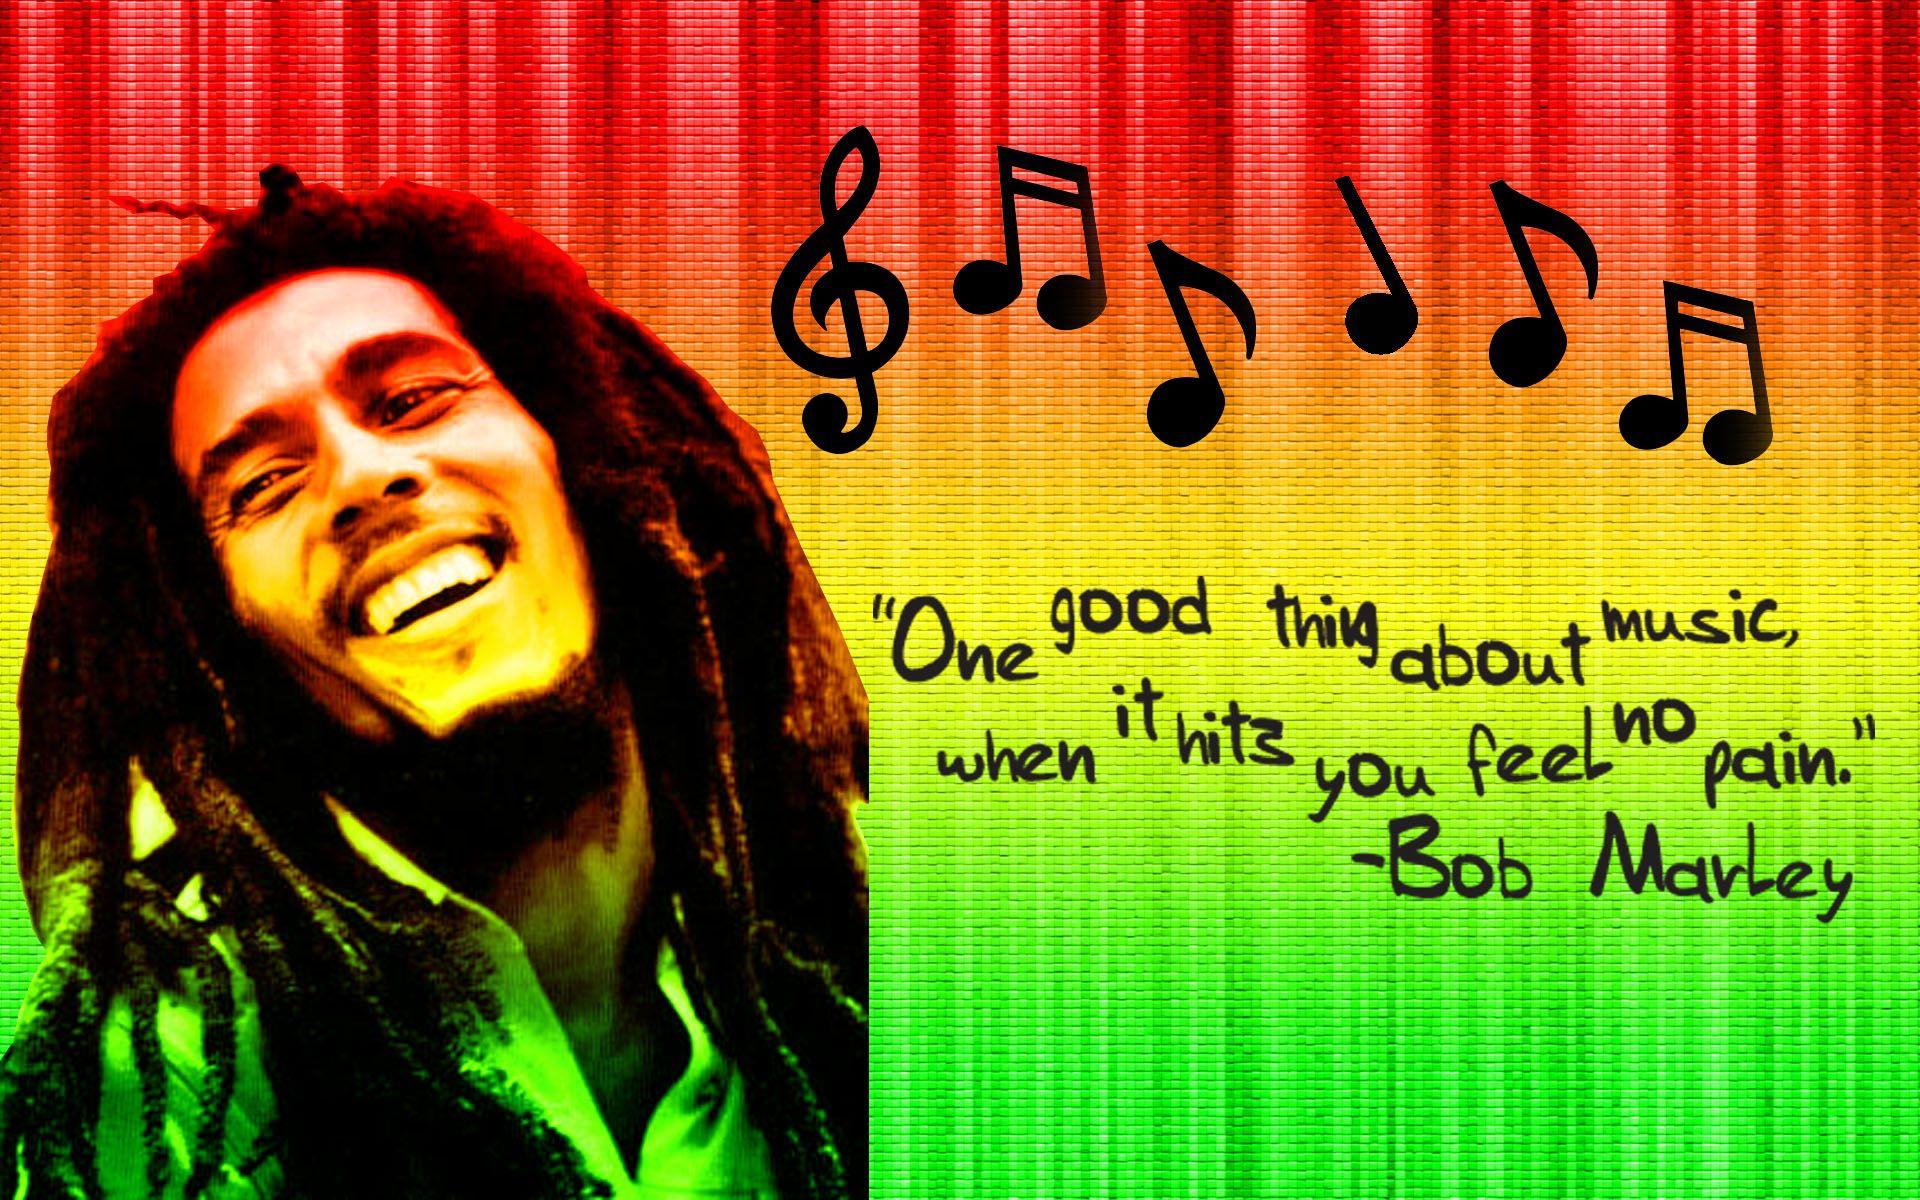 HD Bob Marley Wallpaper and Photo. HD Celebrities Wallpaper